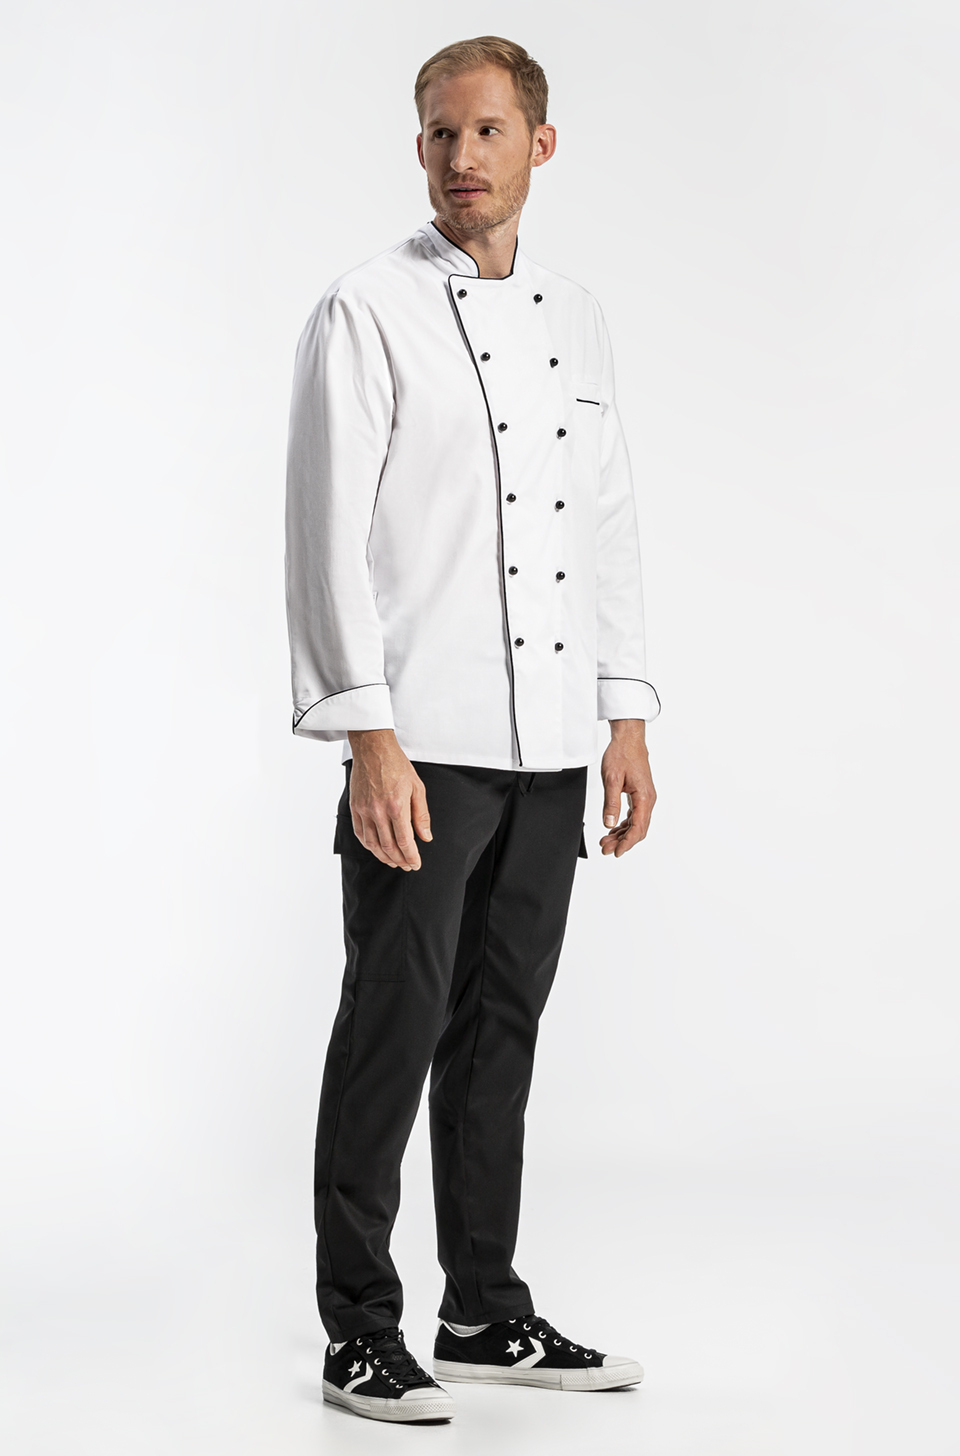 Men's chef jacket regular fit